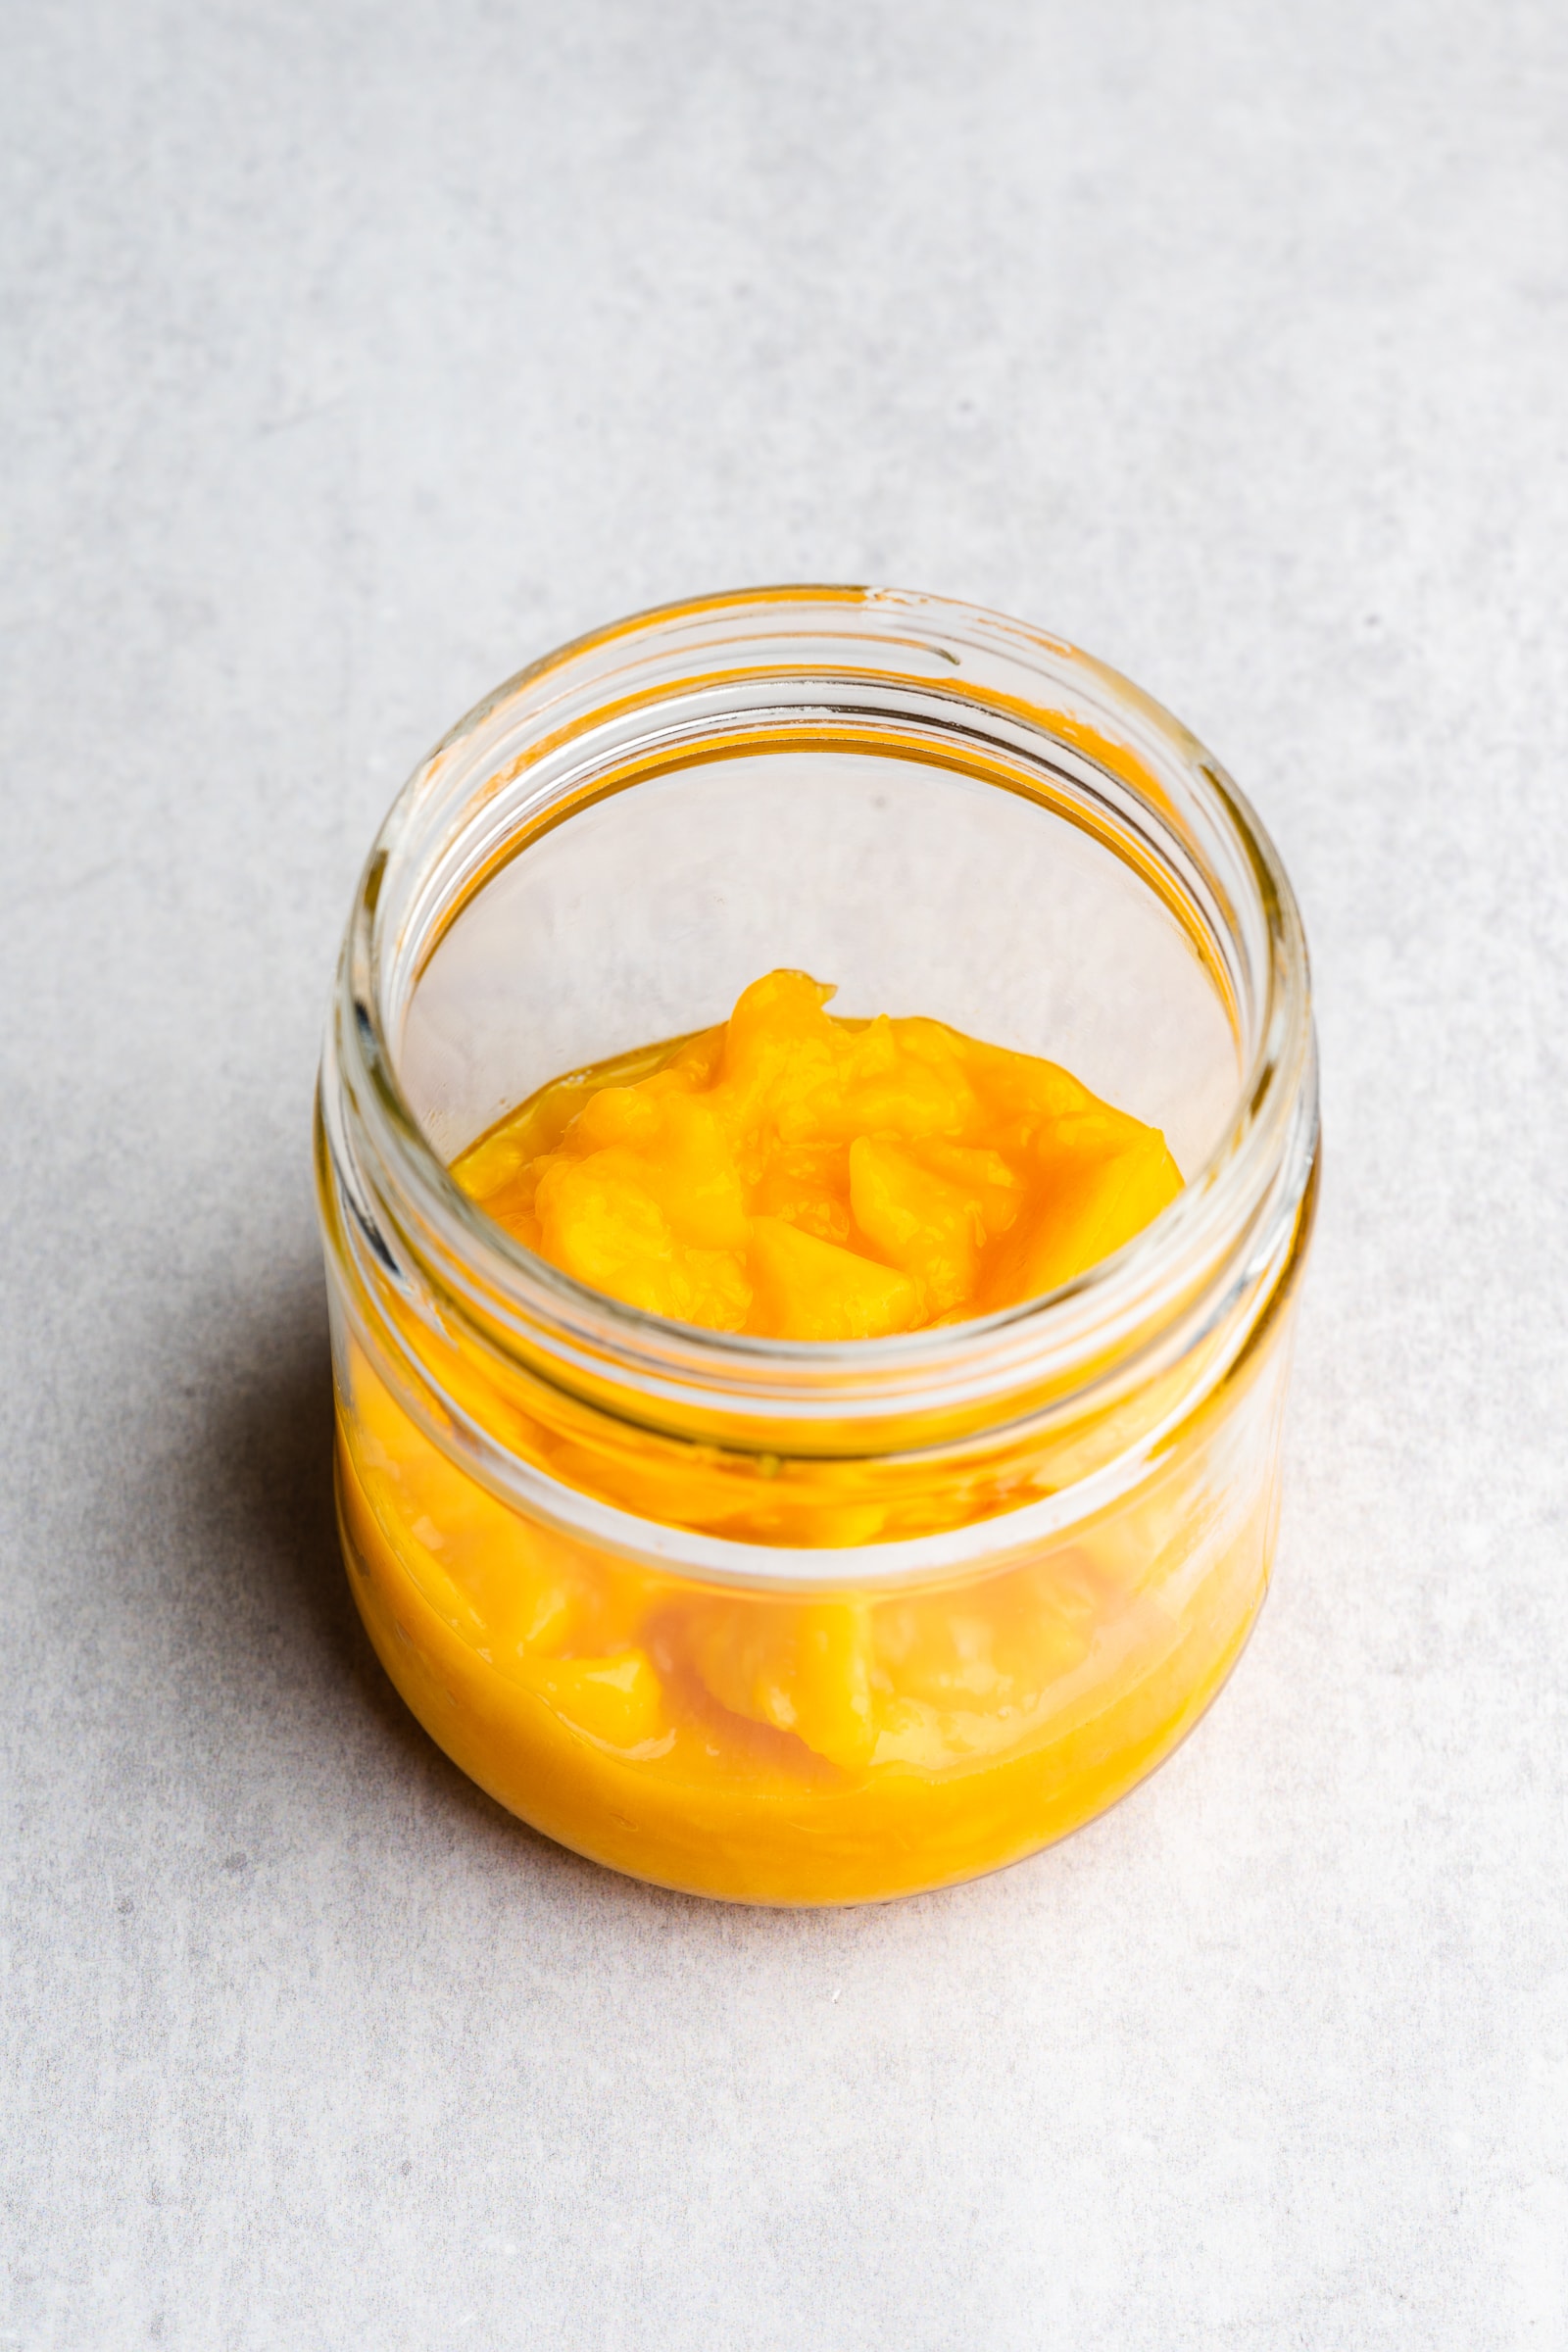 Mashed mango in jar.